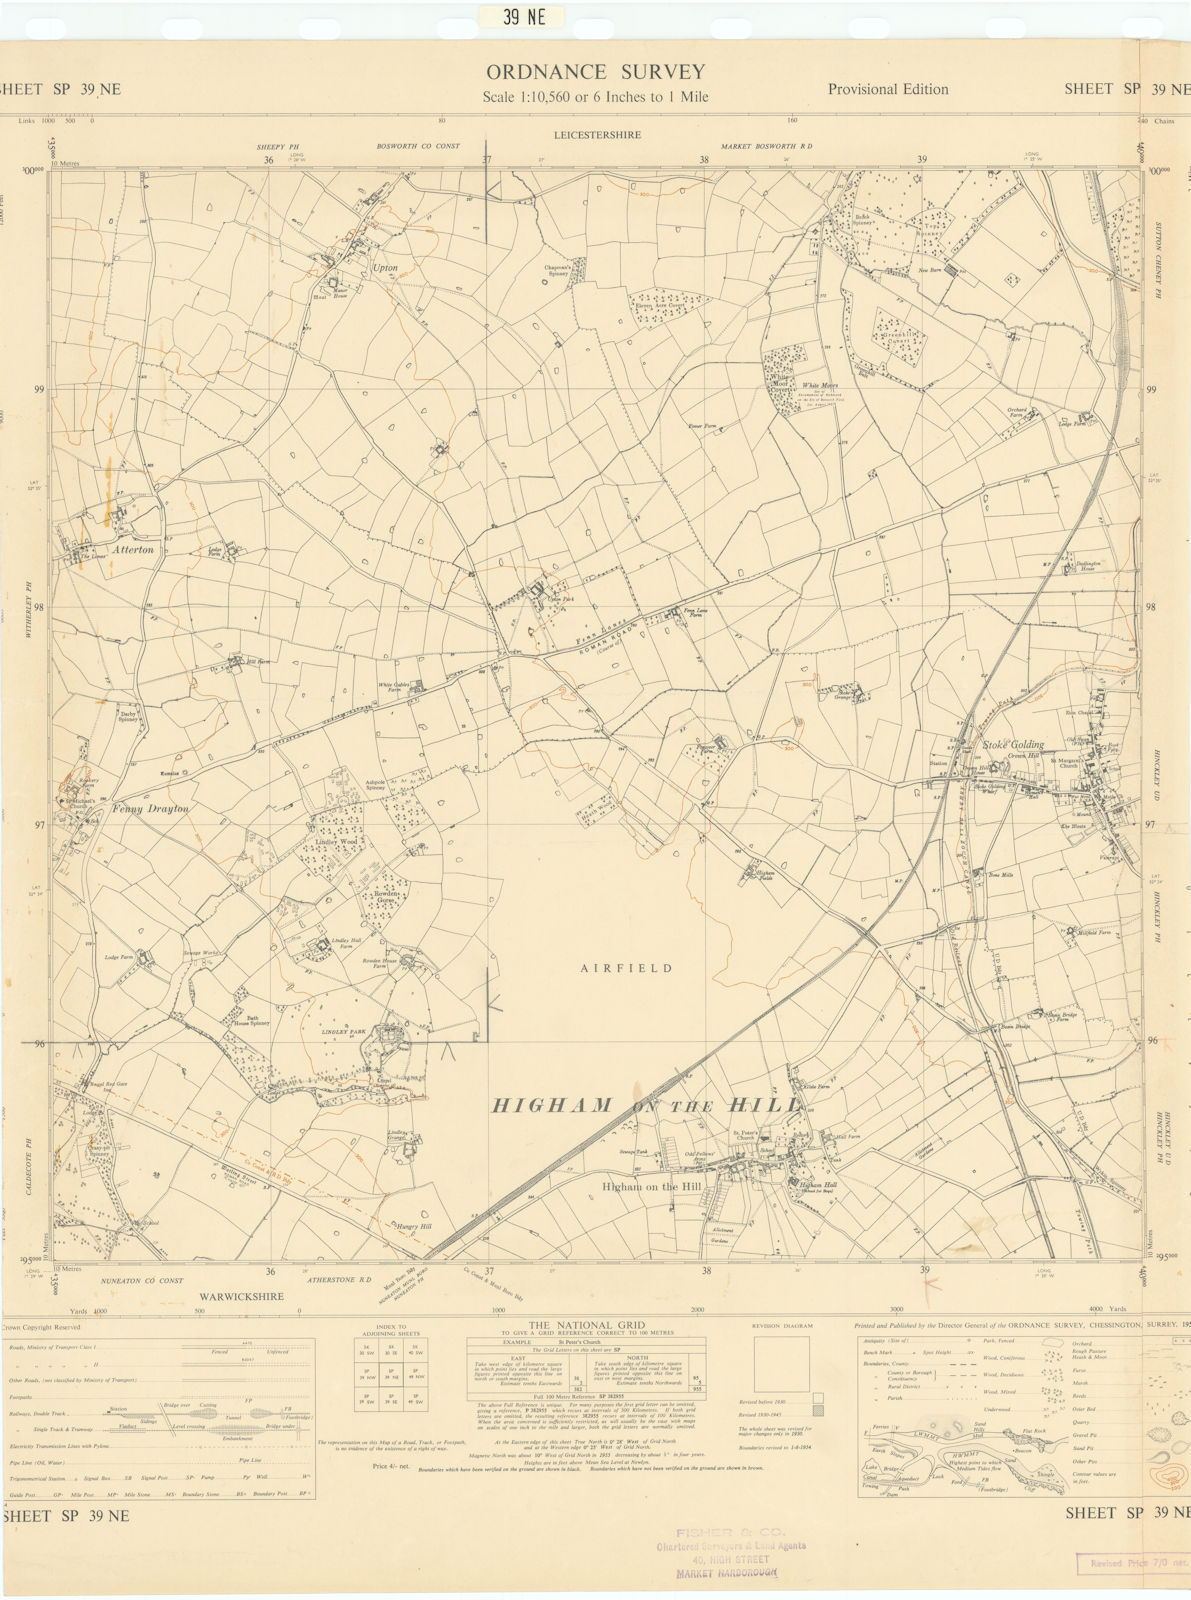 Ordnance Survey SP39NE Leics Higham/Hill Stoke Golding Fenny Drayton 1955 map